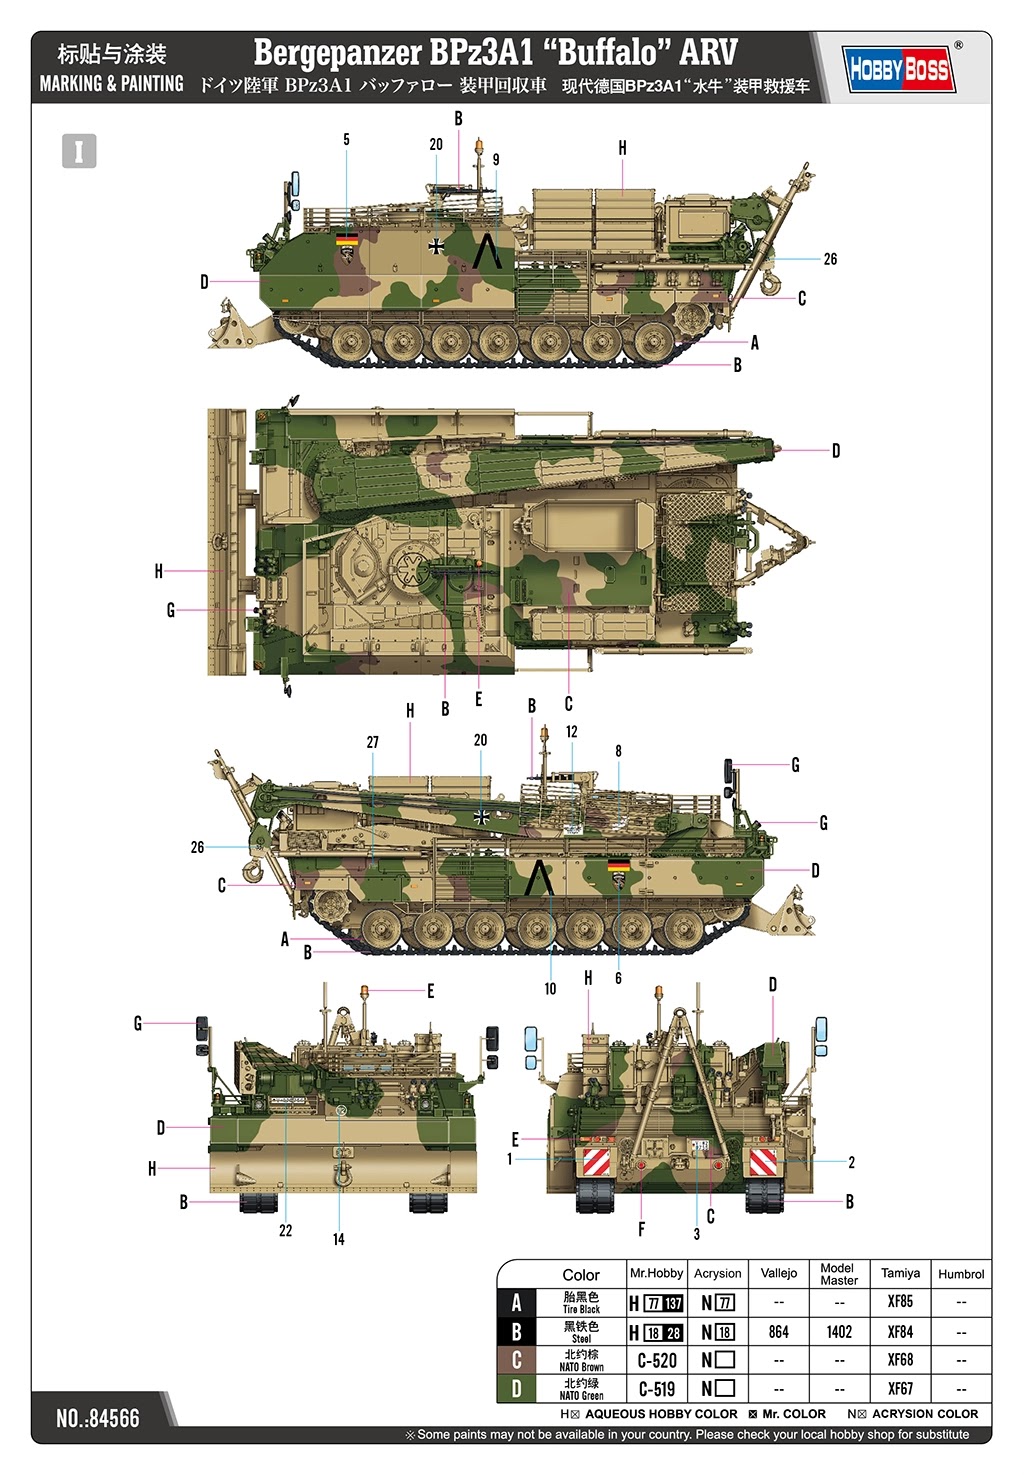 Bergepanzer BPz3A1 “Buffalo” ARV Painting and Marking-2